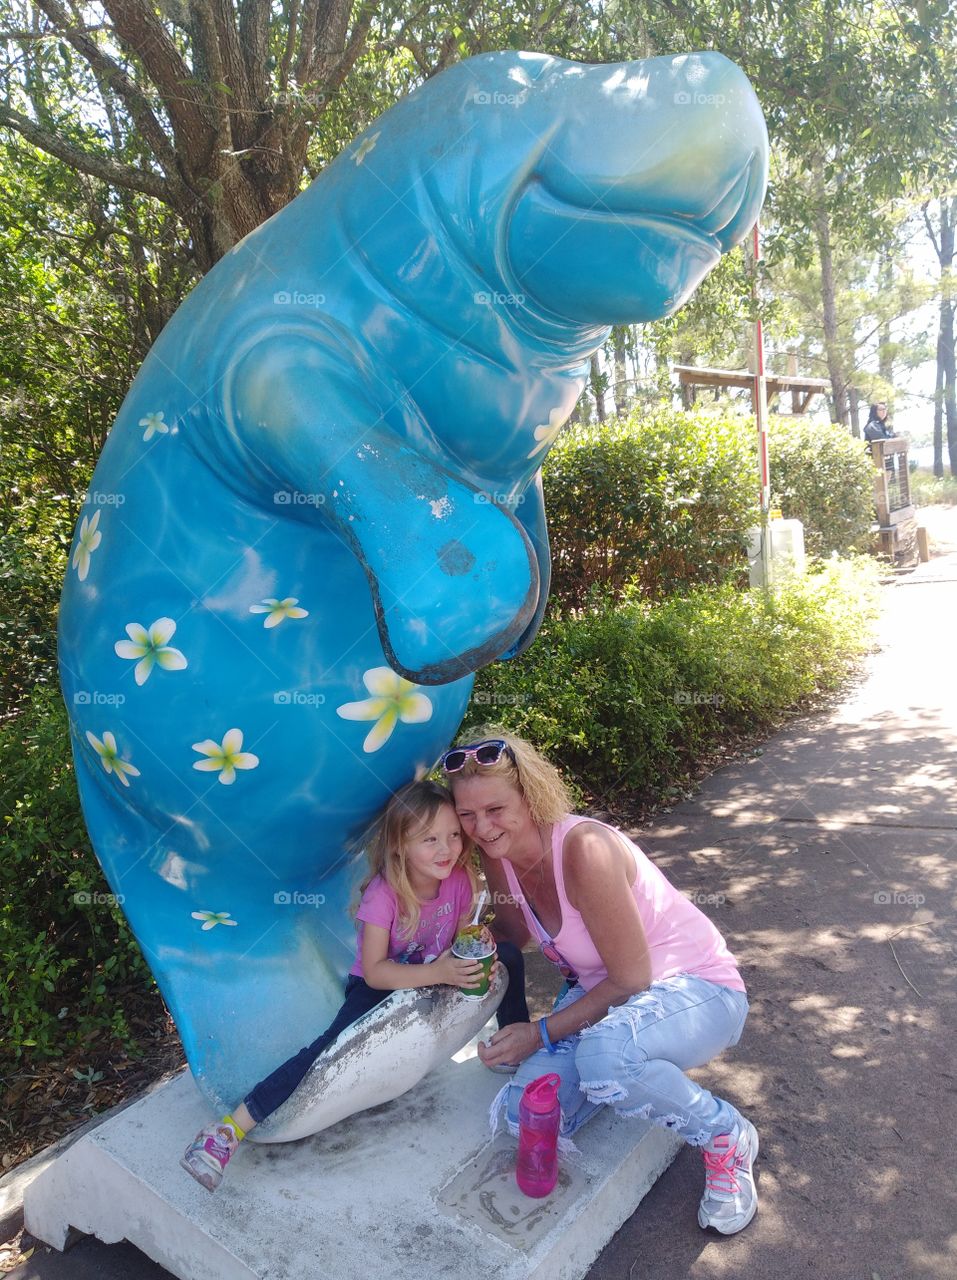 Jacksonville zoo